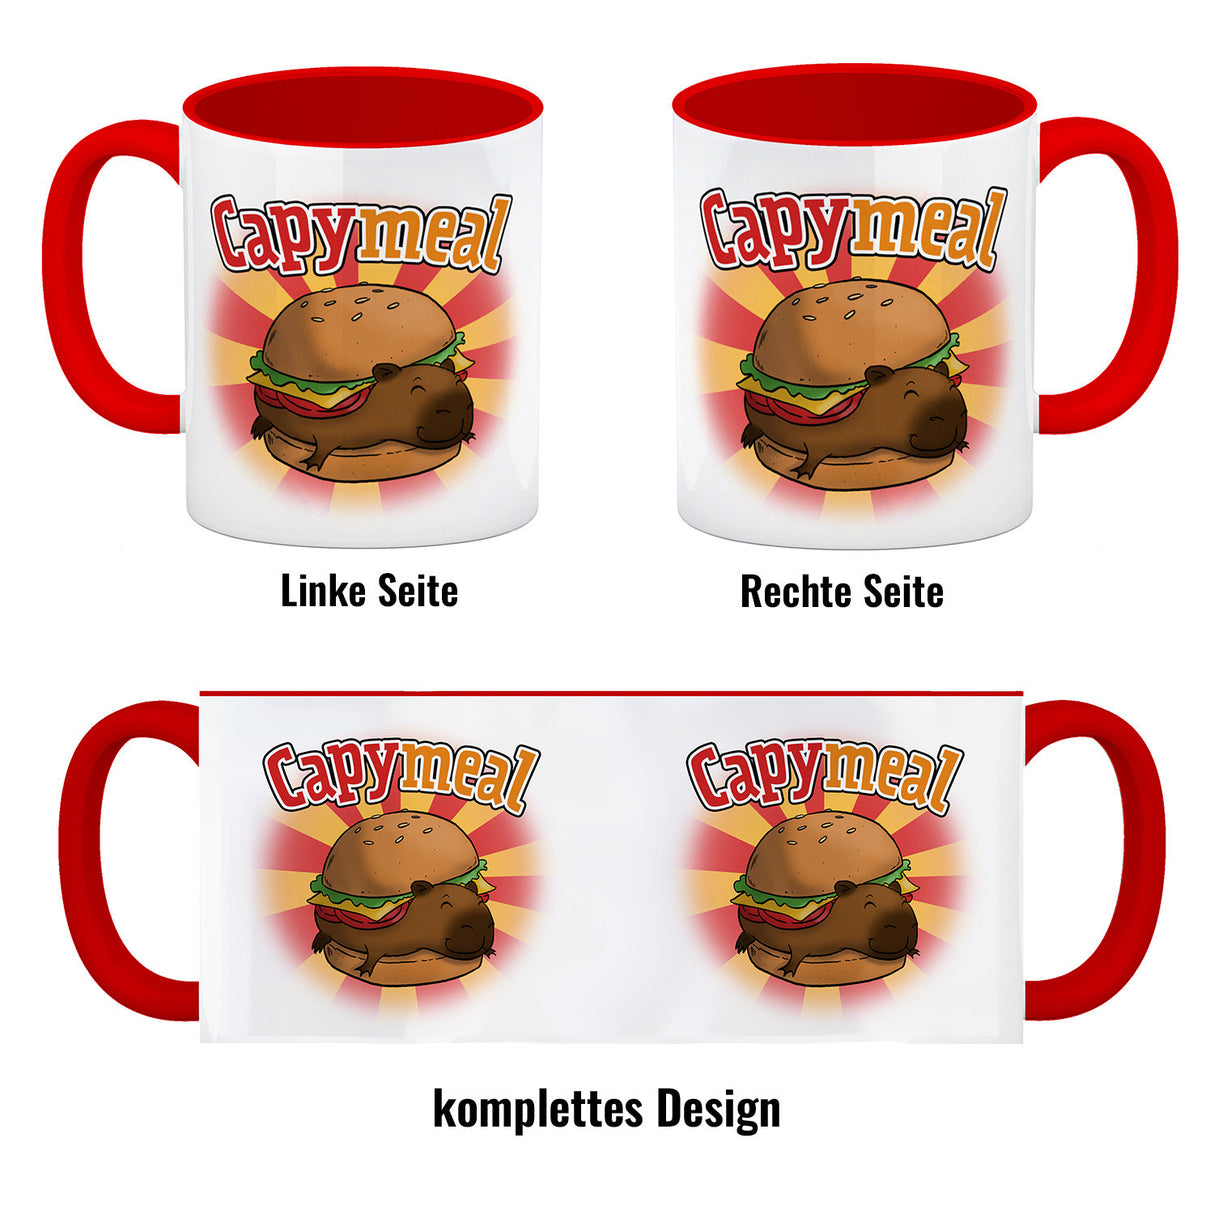 Capymeal Kaffeebecher mit Capybara Motiv für Fastfood Junkies